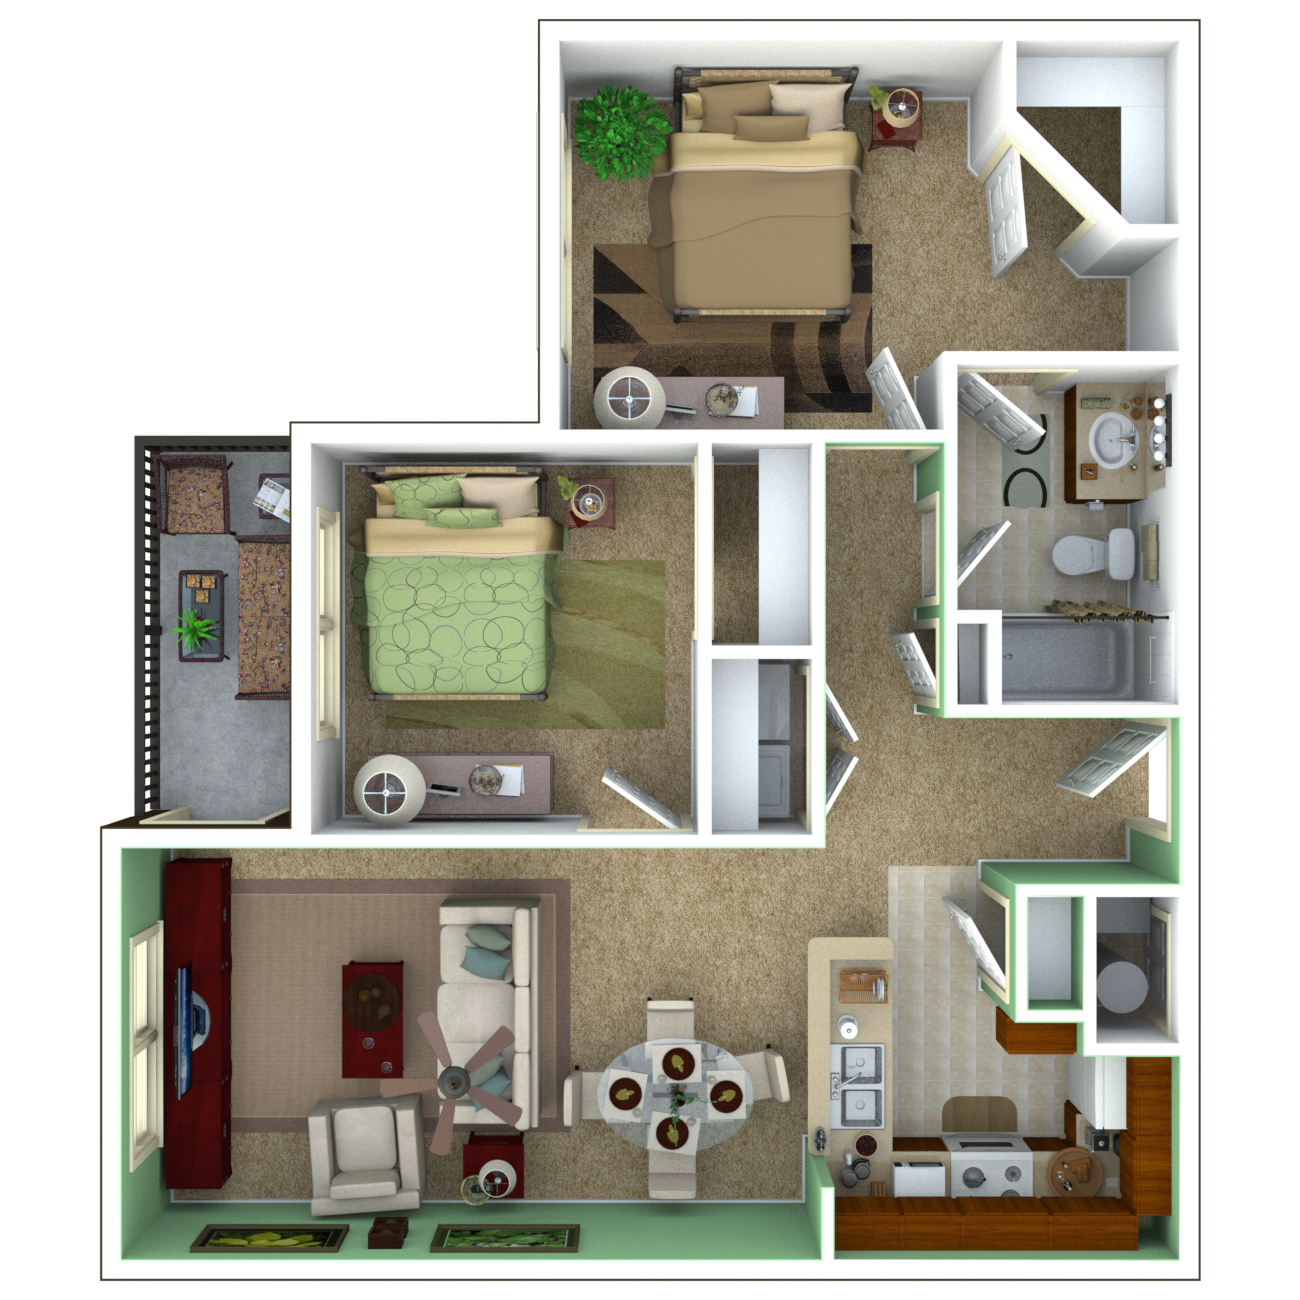 Tranquility Floor Plan 2 bedroom apartment